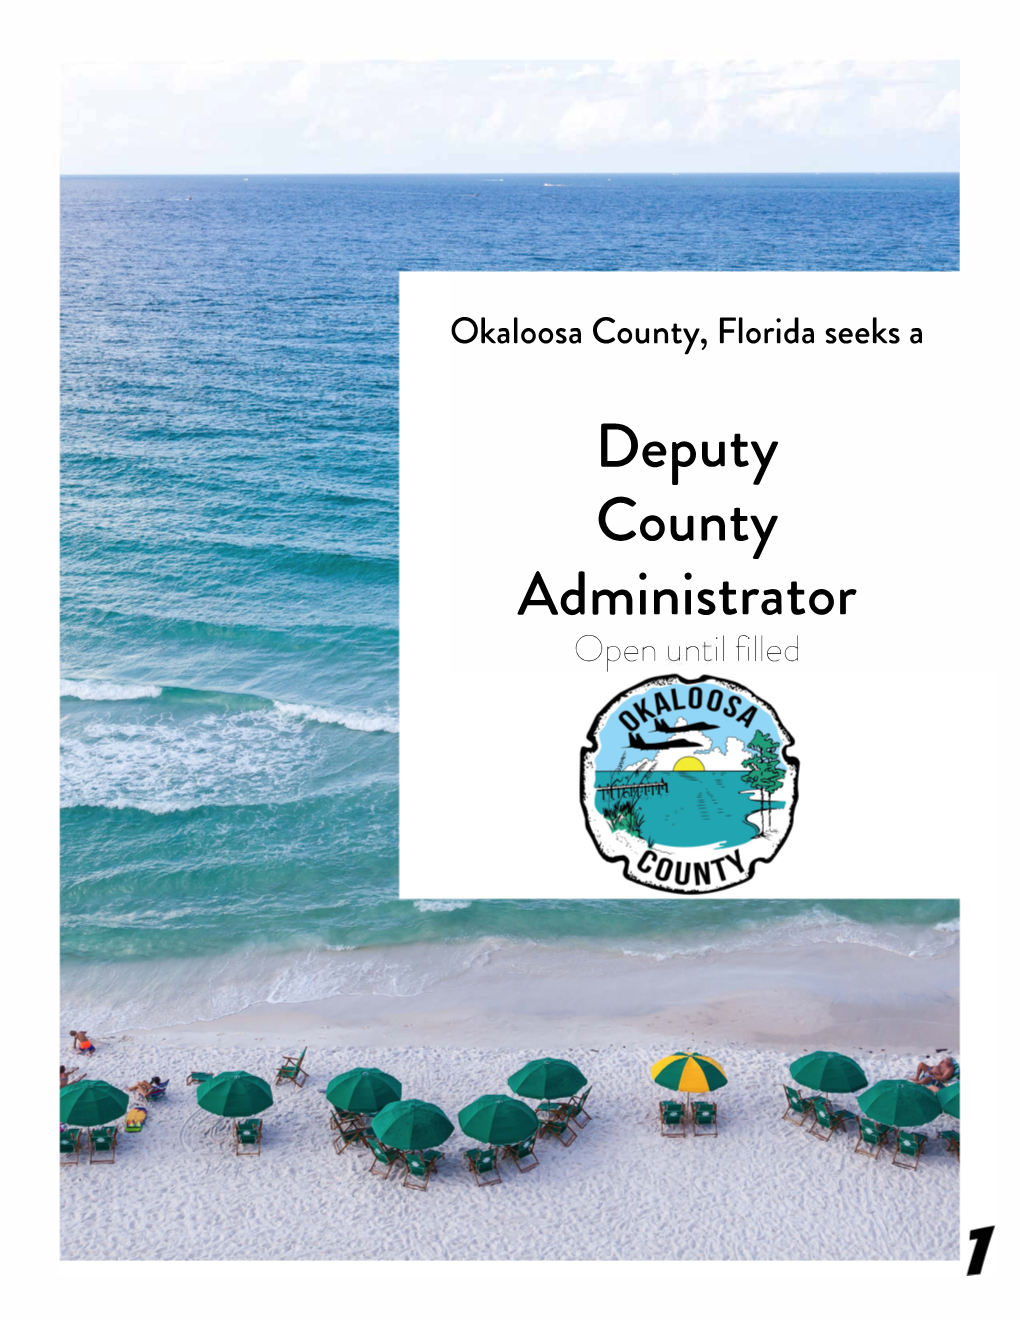 Okaloosa County, Florida Seeks a Deputy County Administrator